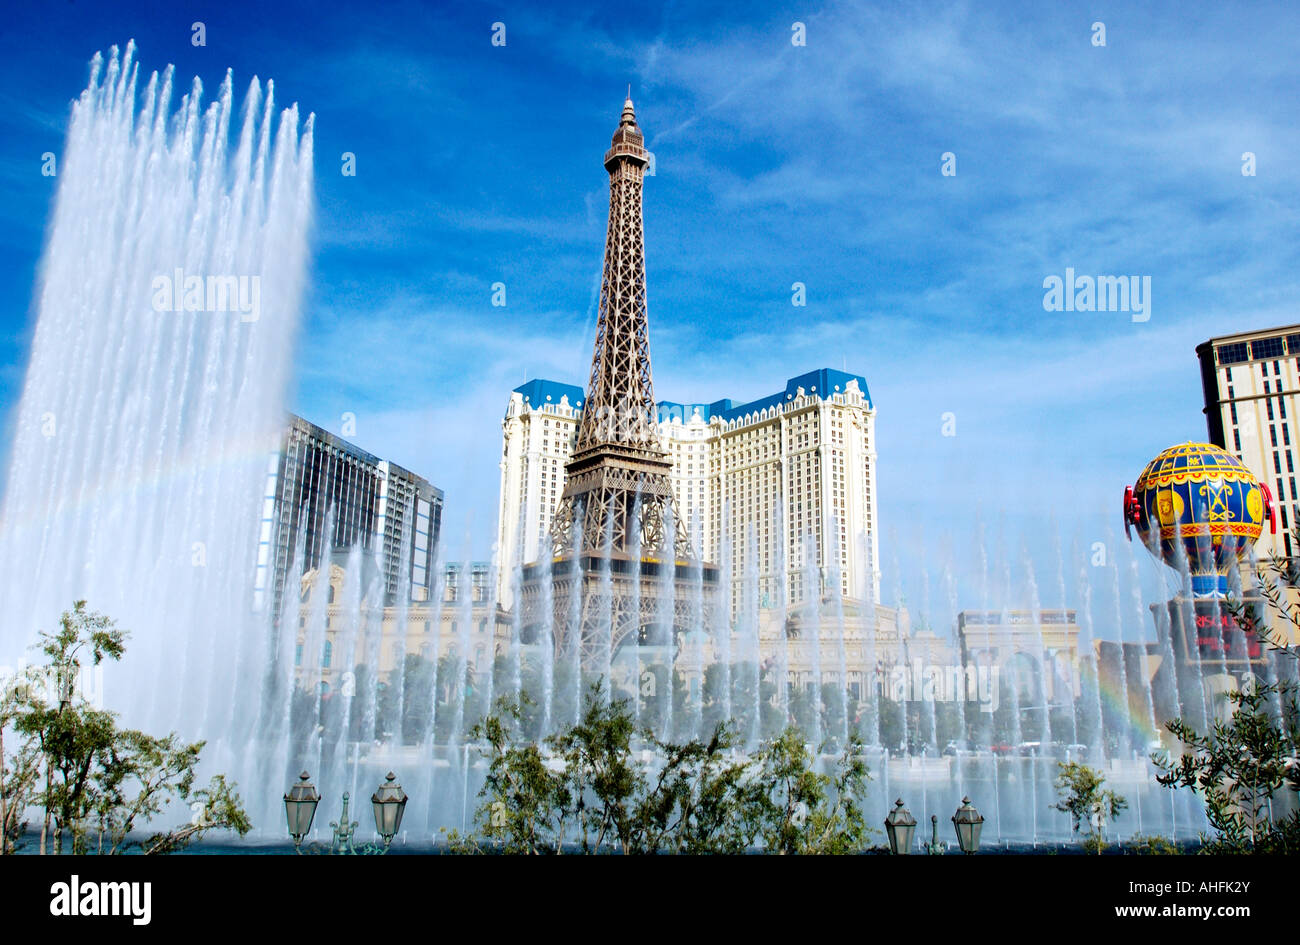 Eiffel Tower replica at Paris hotel Las Vegas Stock Photo